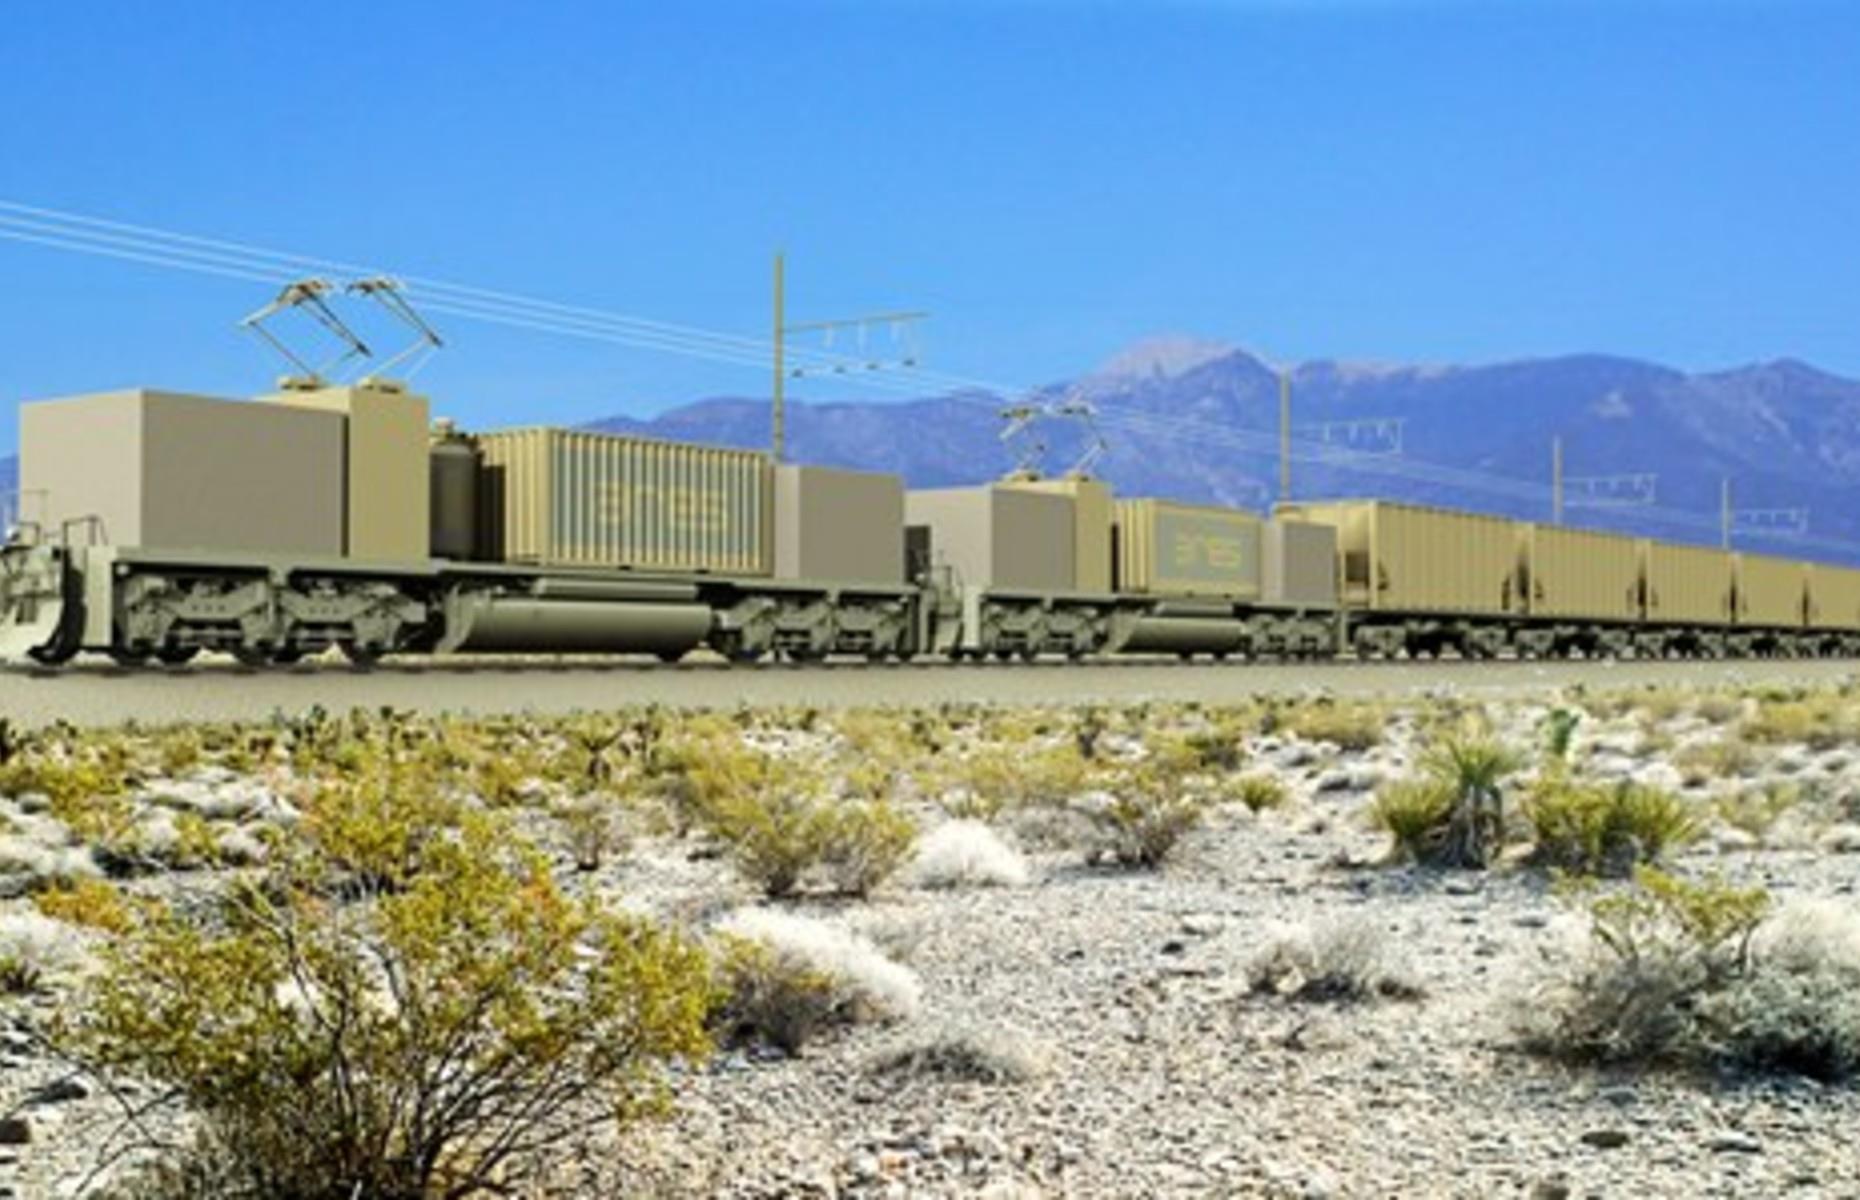 Rail energy storage